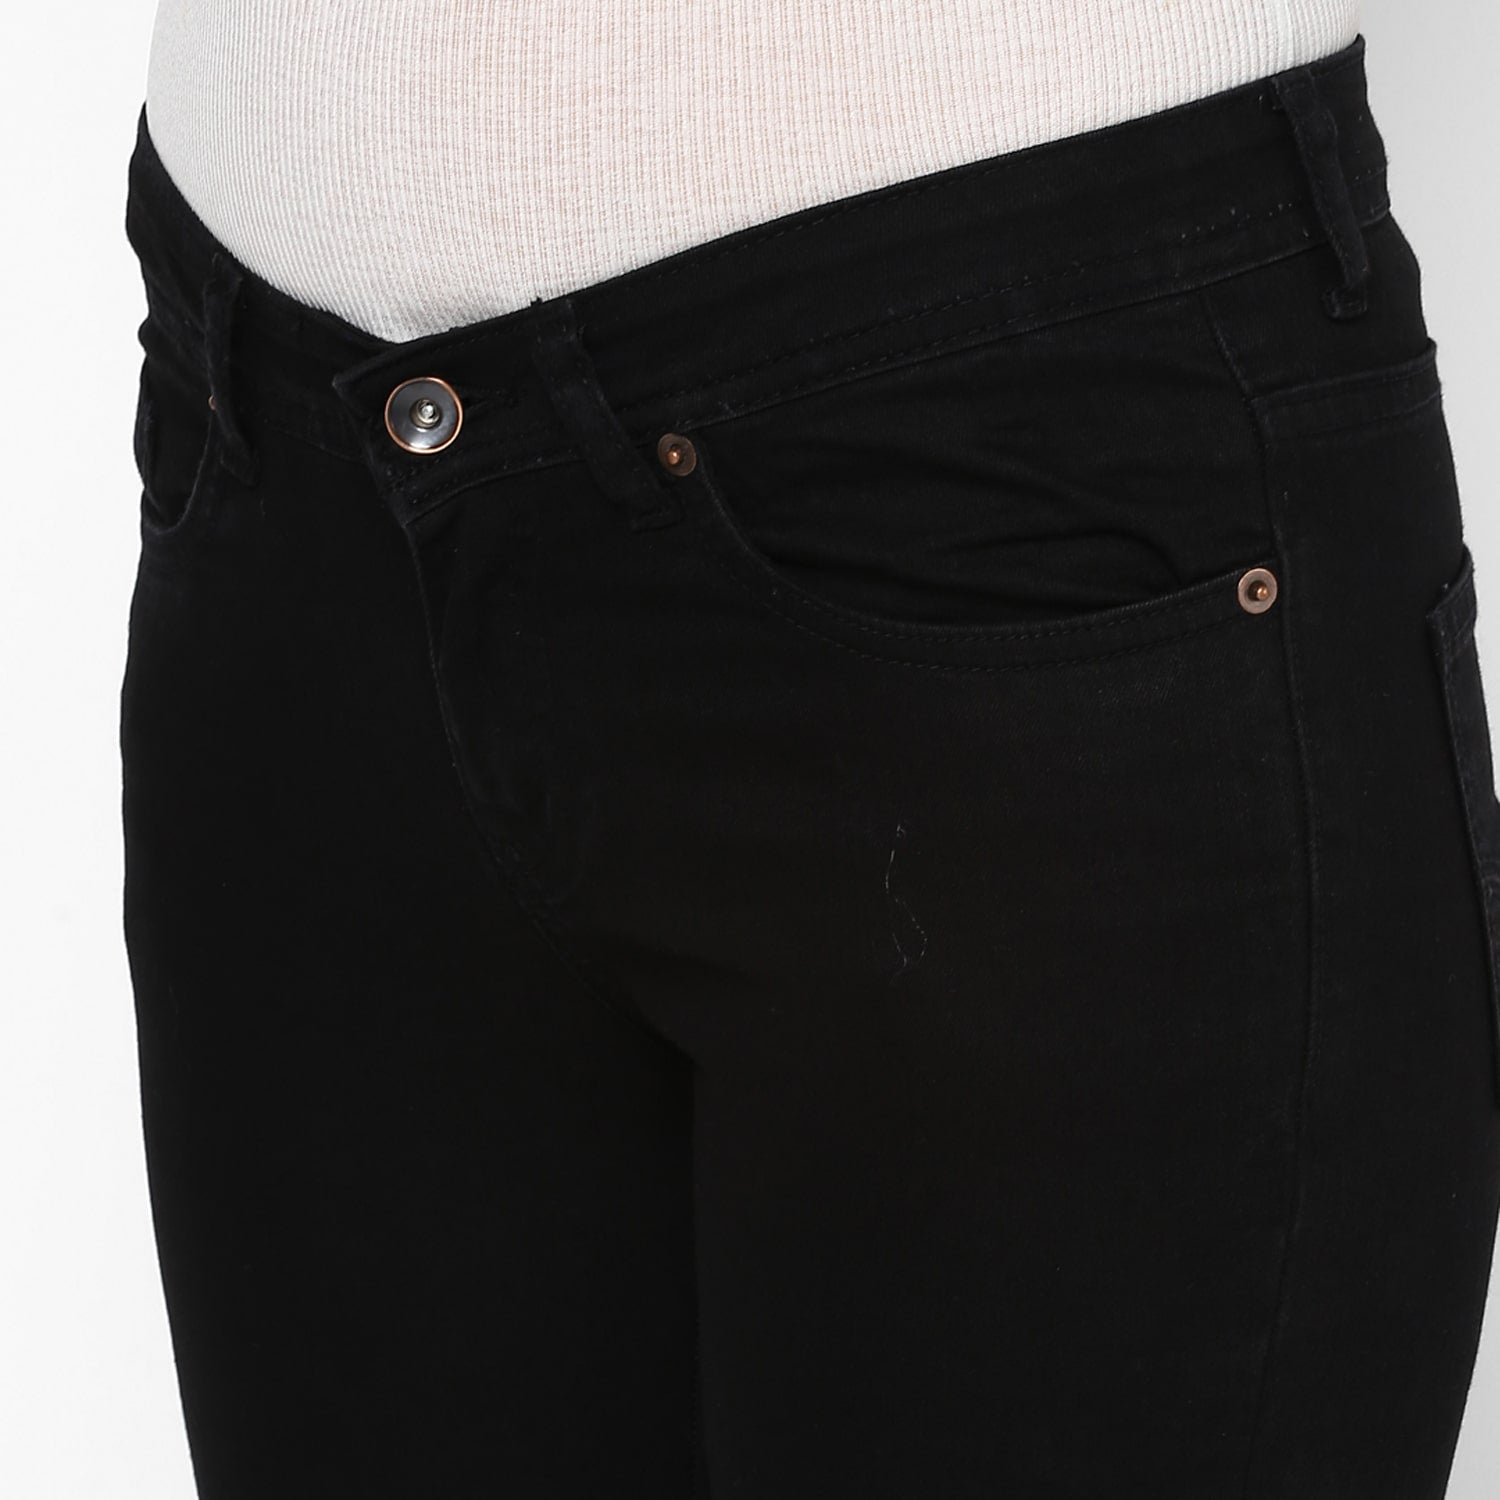 Women's Black Skinny Fit Denim Jeans Stretch